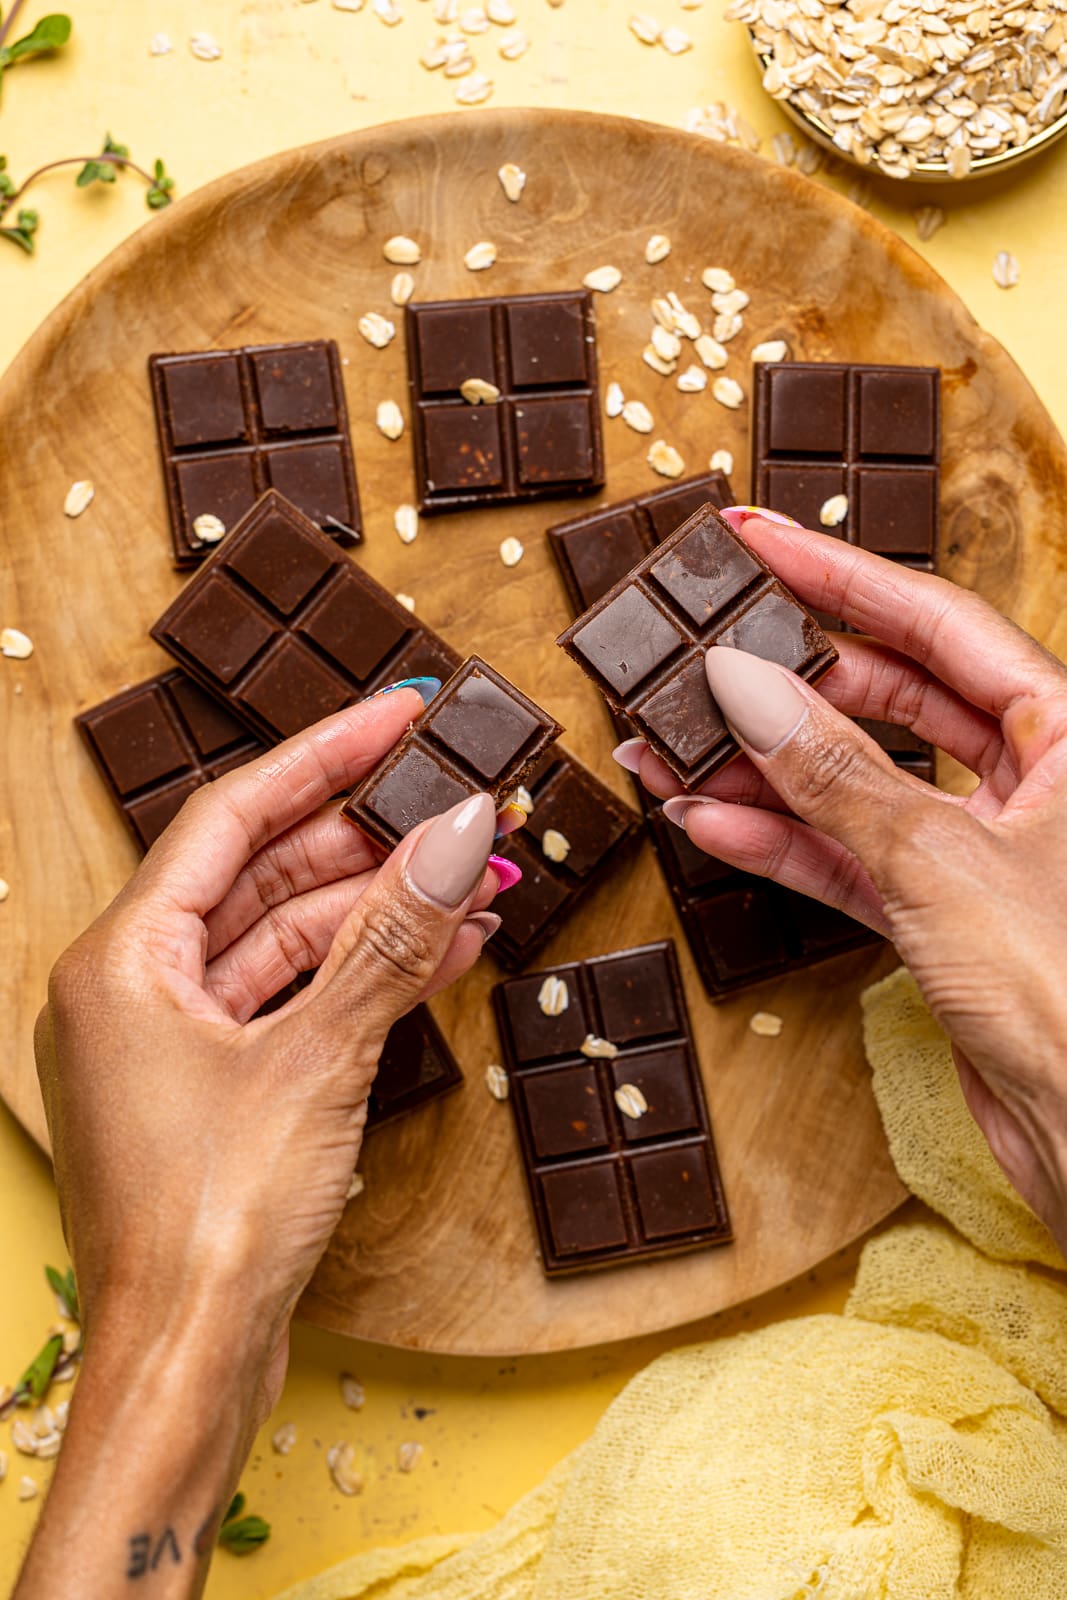 Medium Chocolate Bars, One-part Chocolate Mold